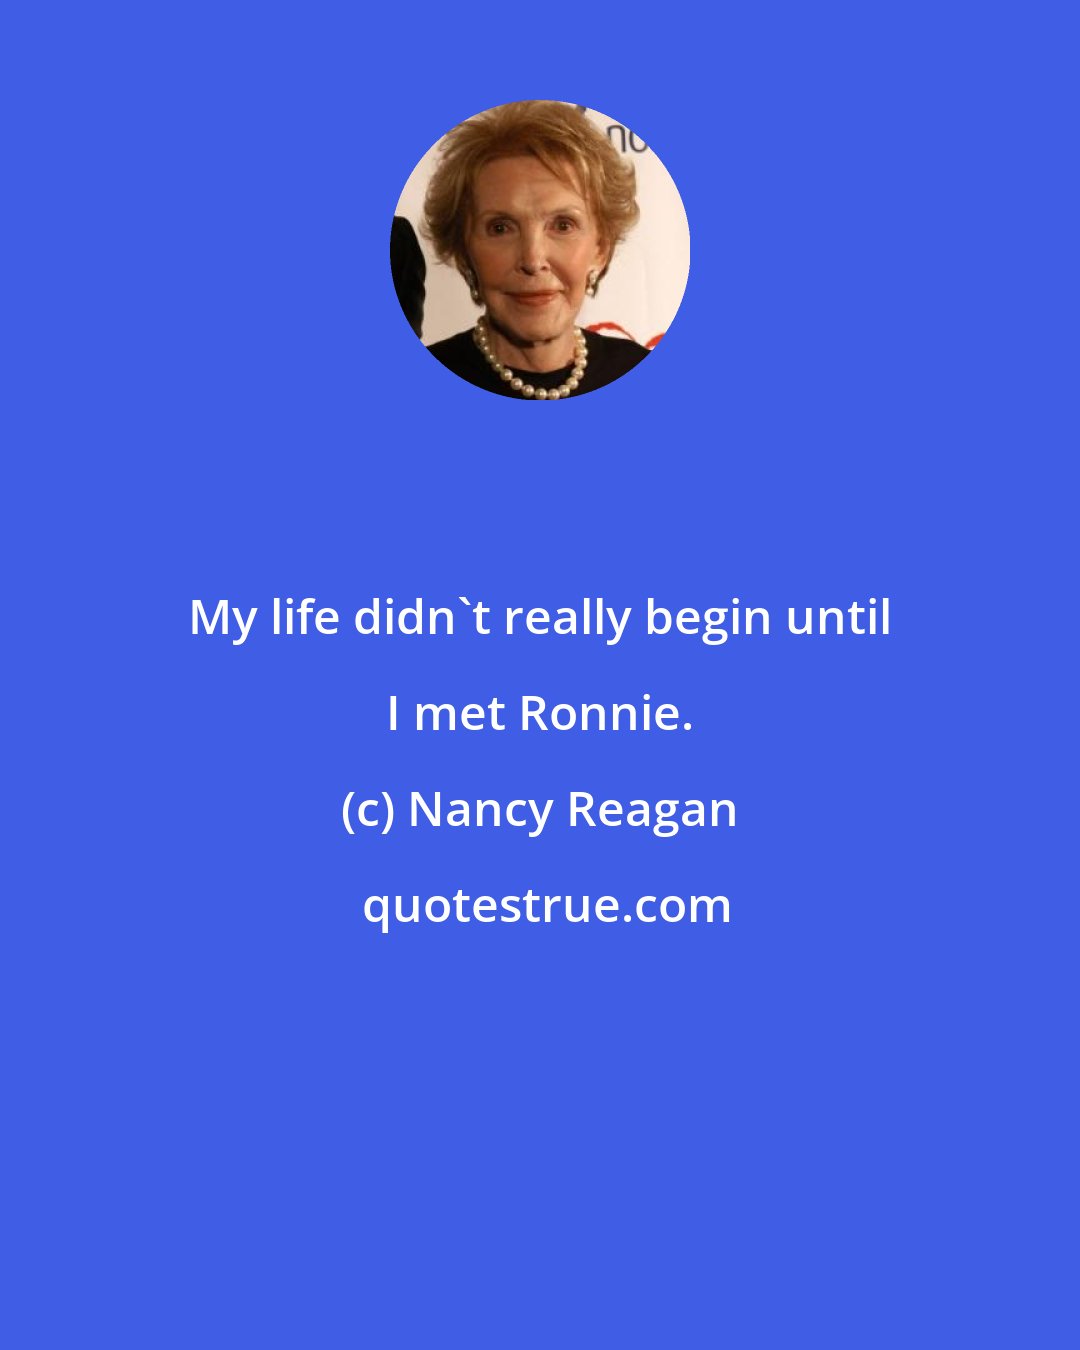 Nancy Reagan: My life didn't really begin until I met Ronnie.